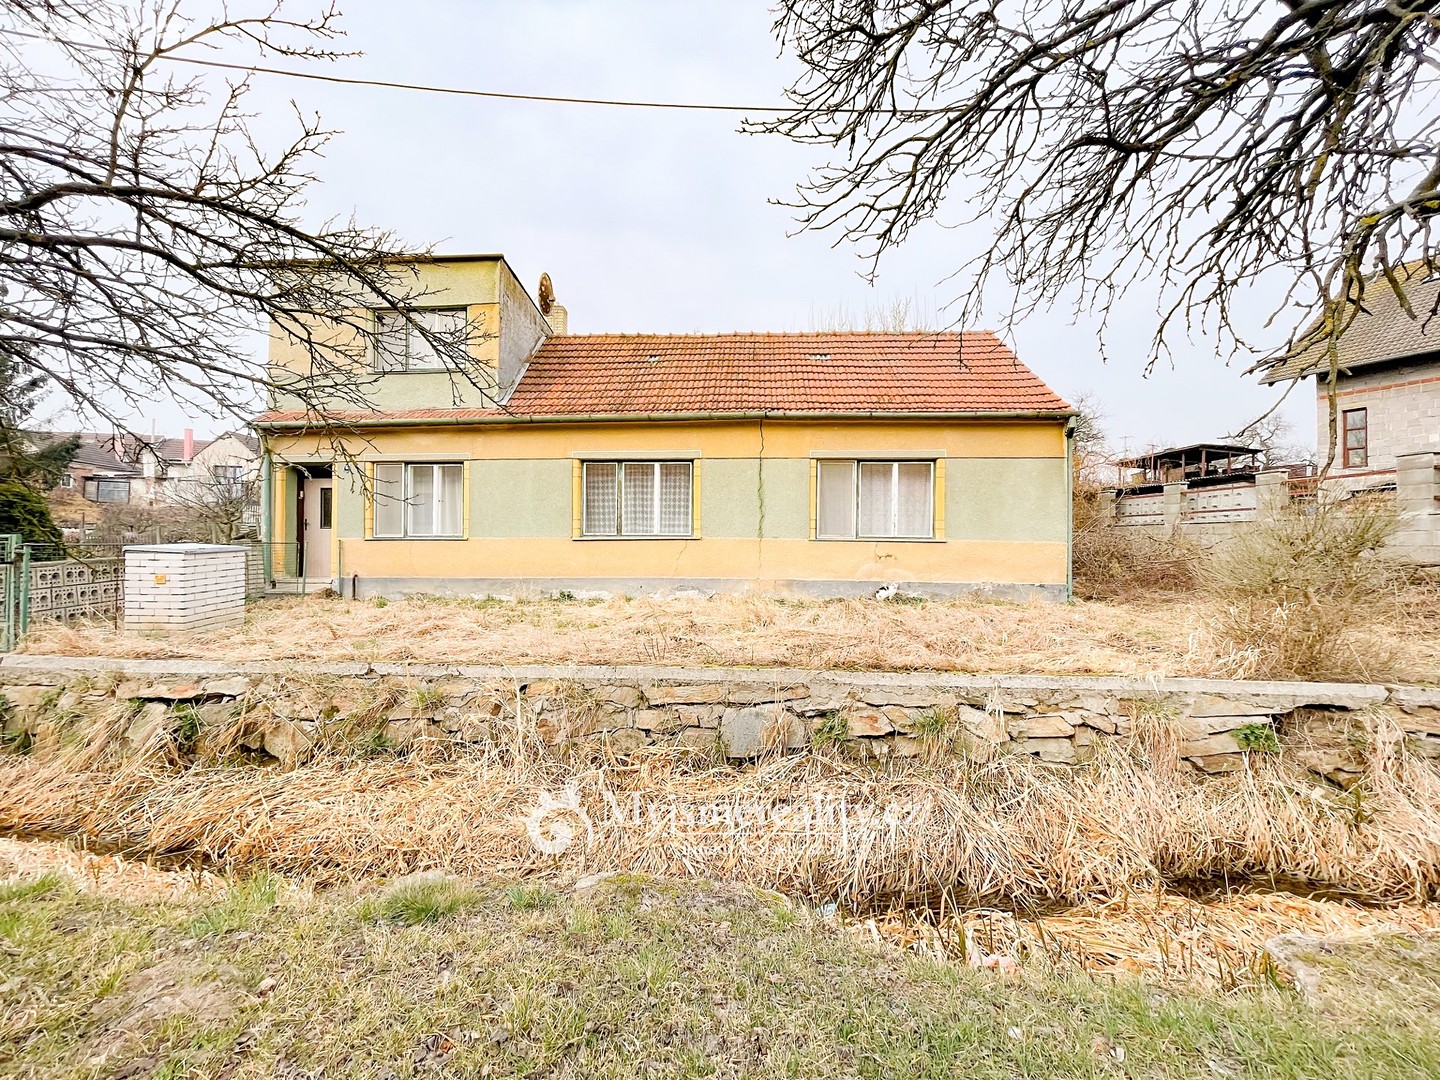 Prodej  stavebního pozemku 909 m², U Potoka, Suchohrdly